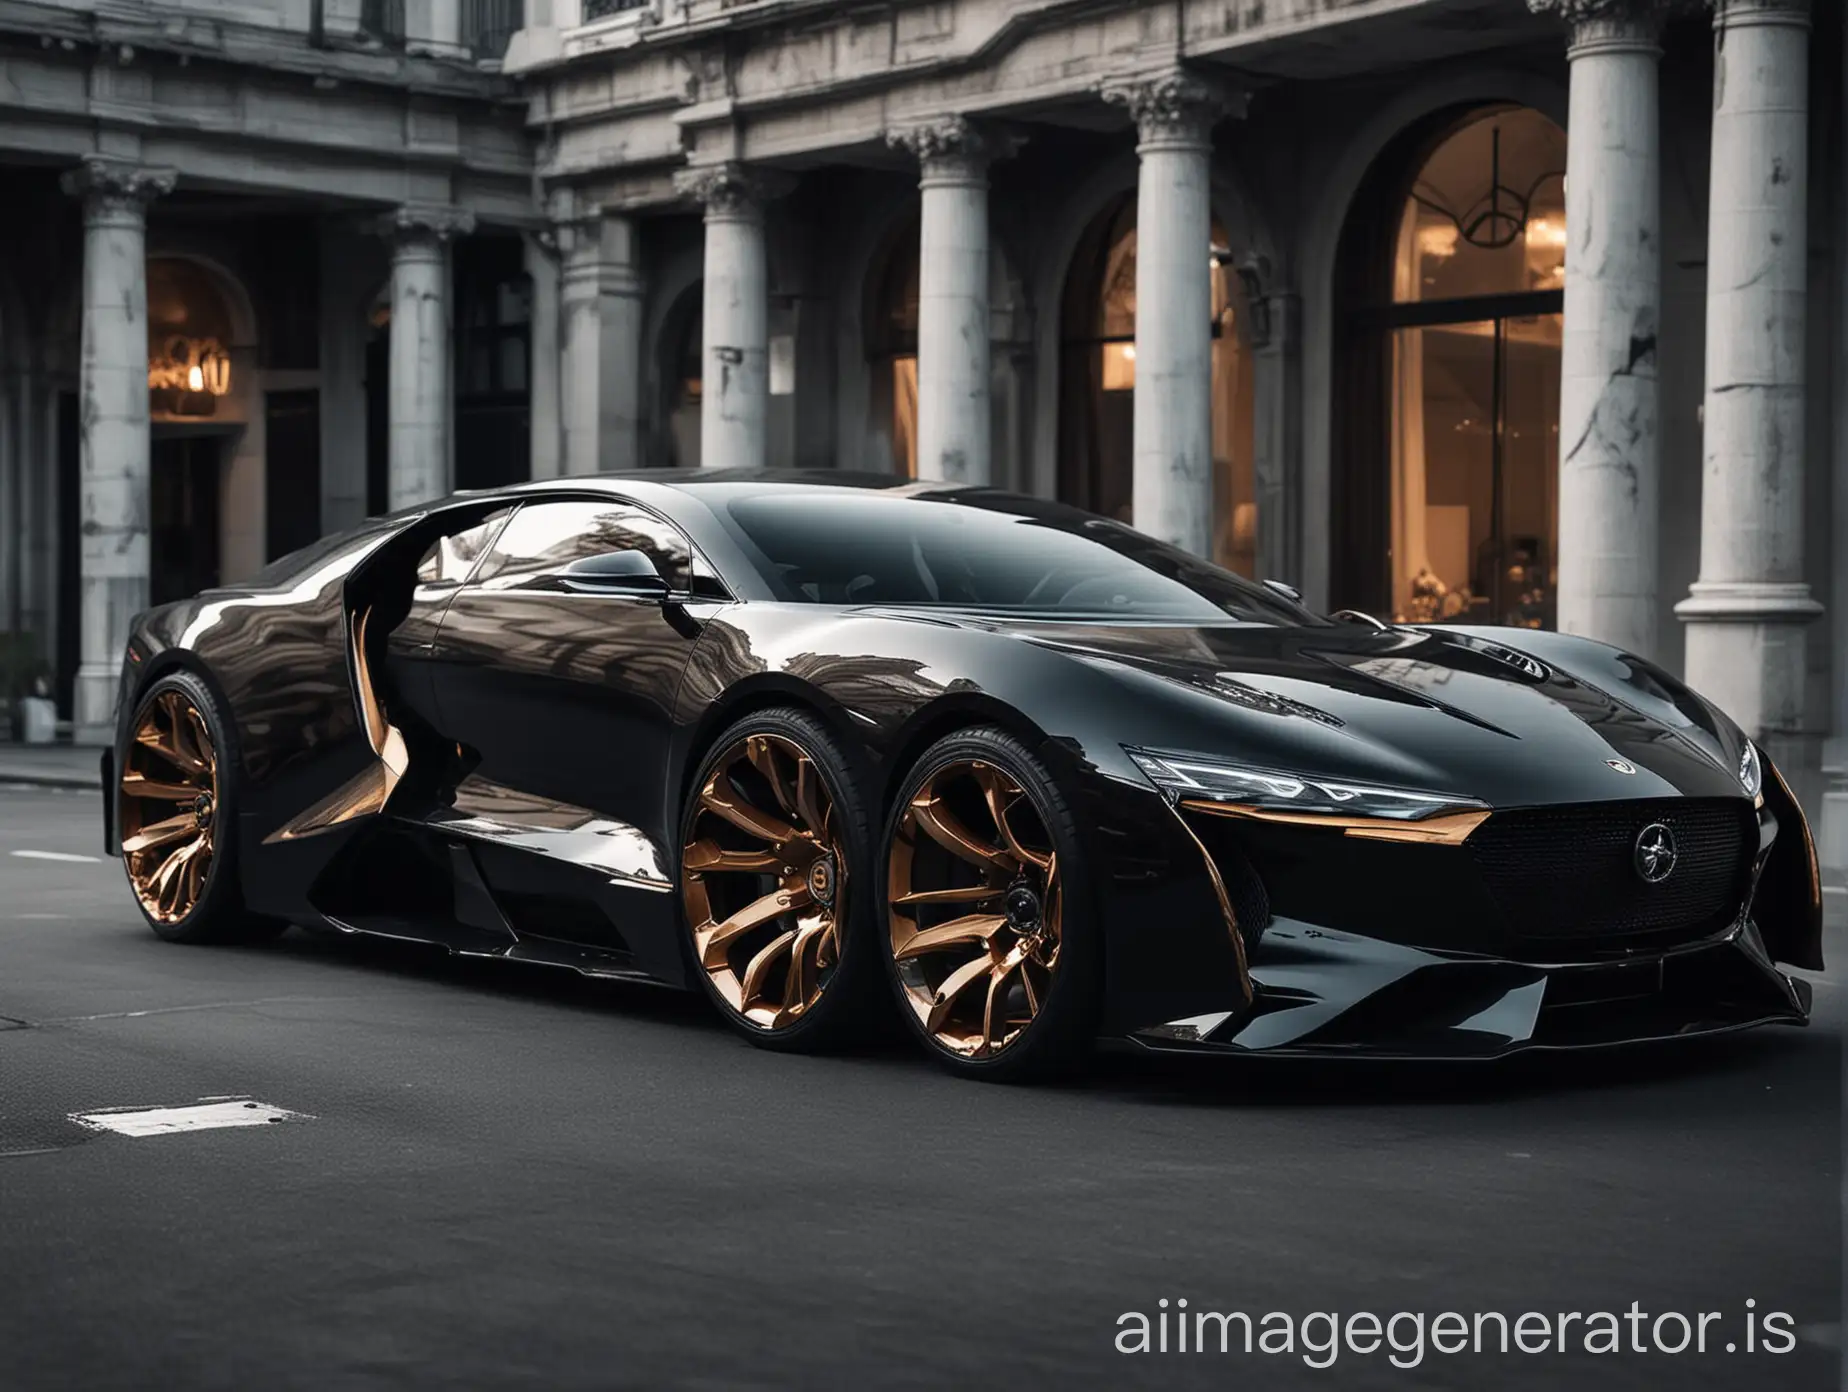 Futuristic-Black-Luxury-Car-Sleek-Design-and-Innovation